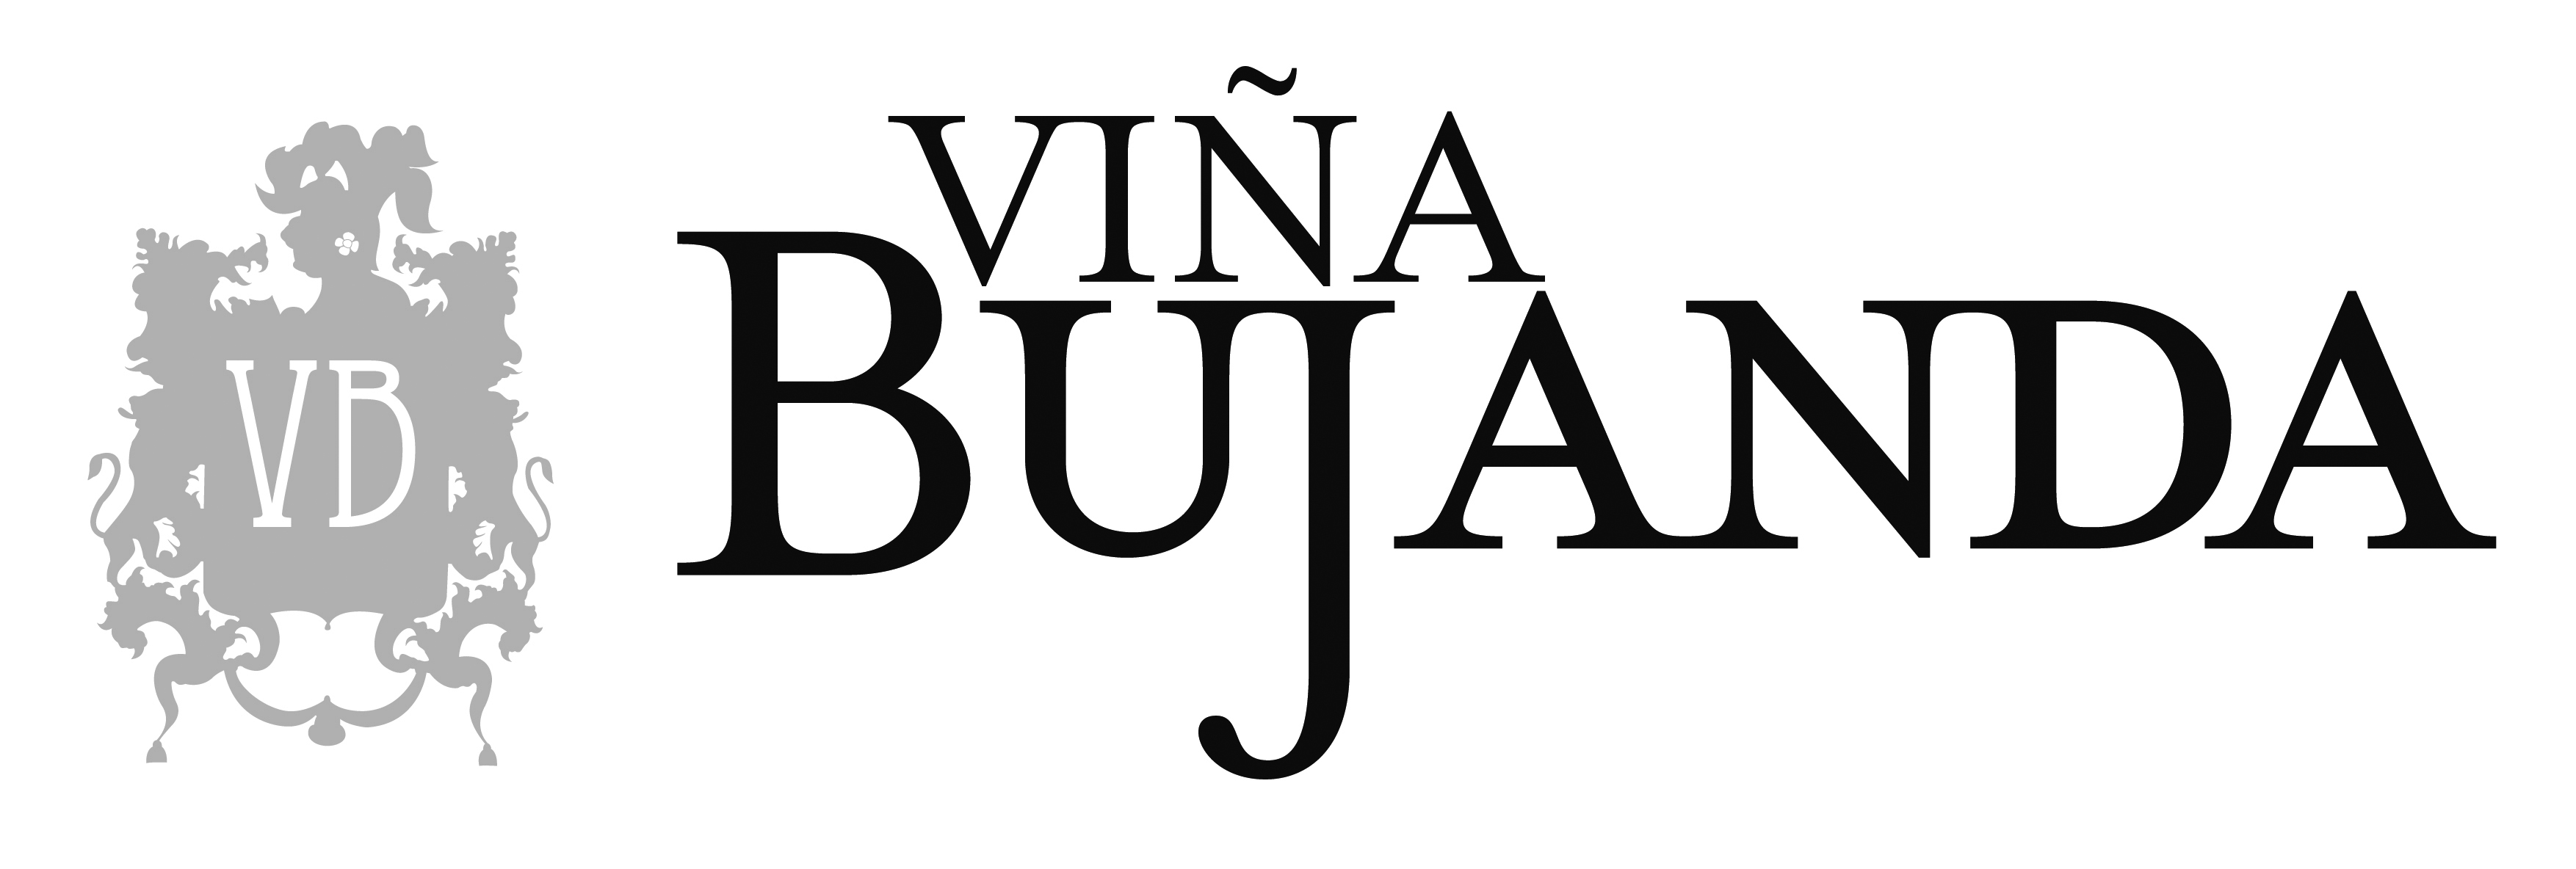 Viña Bujanda - Martinez Bujanda